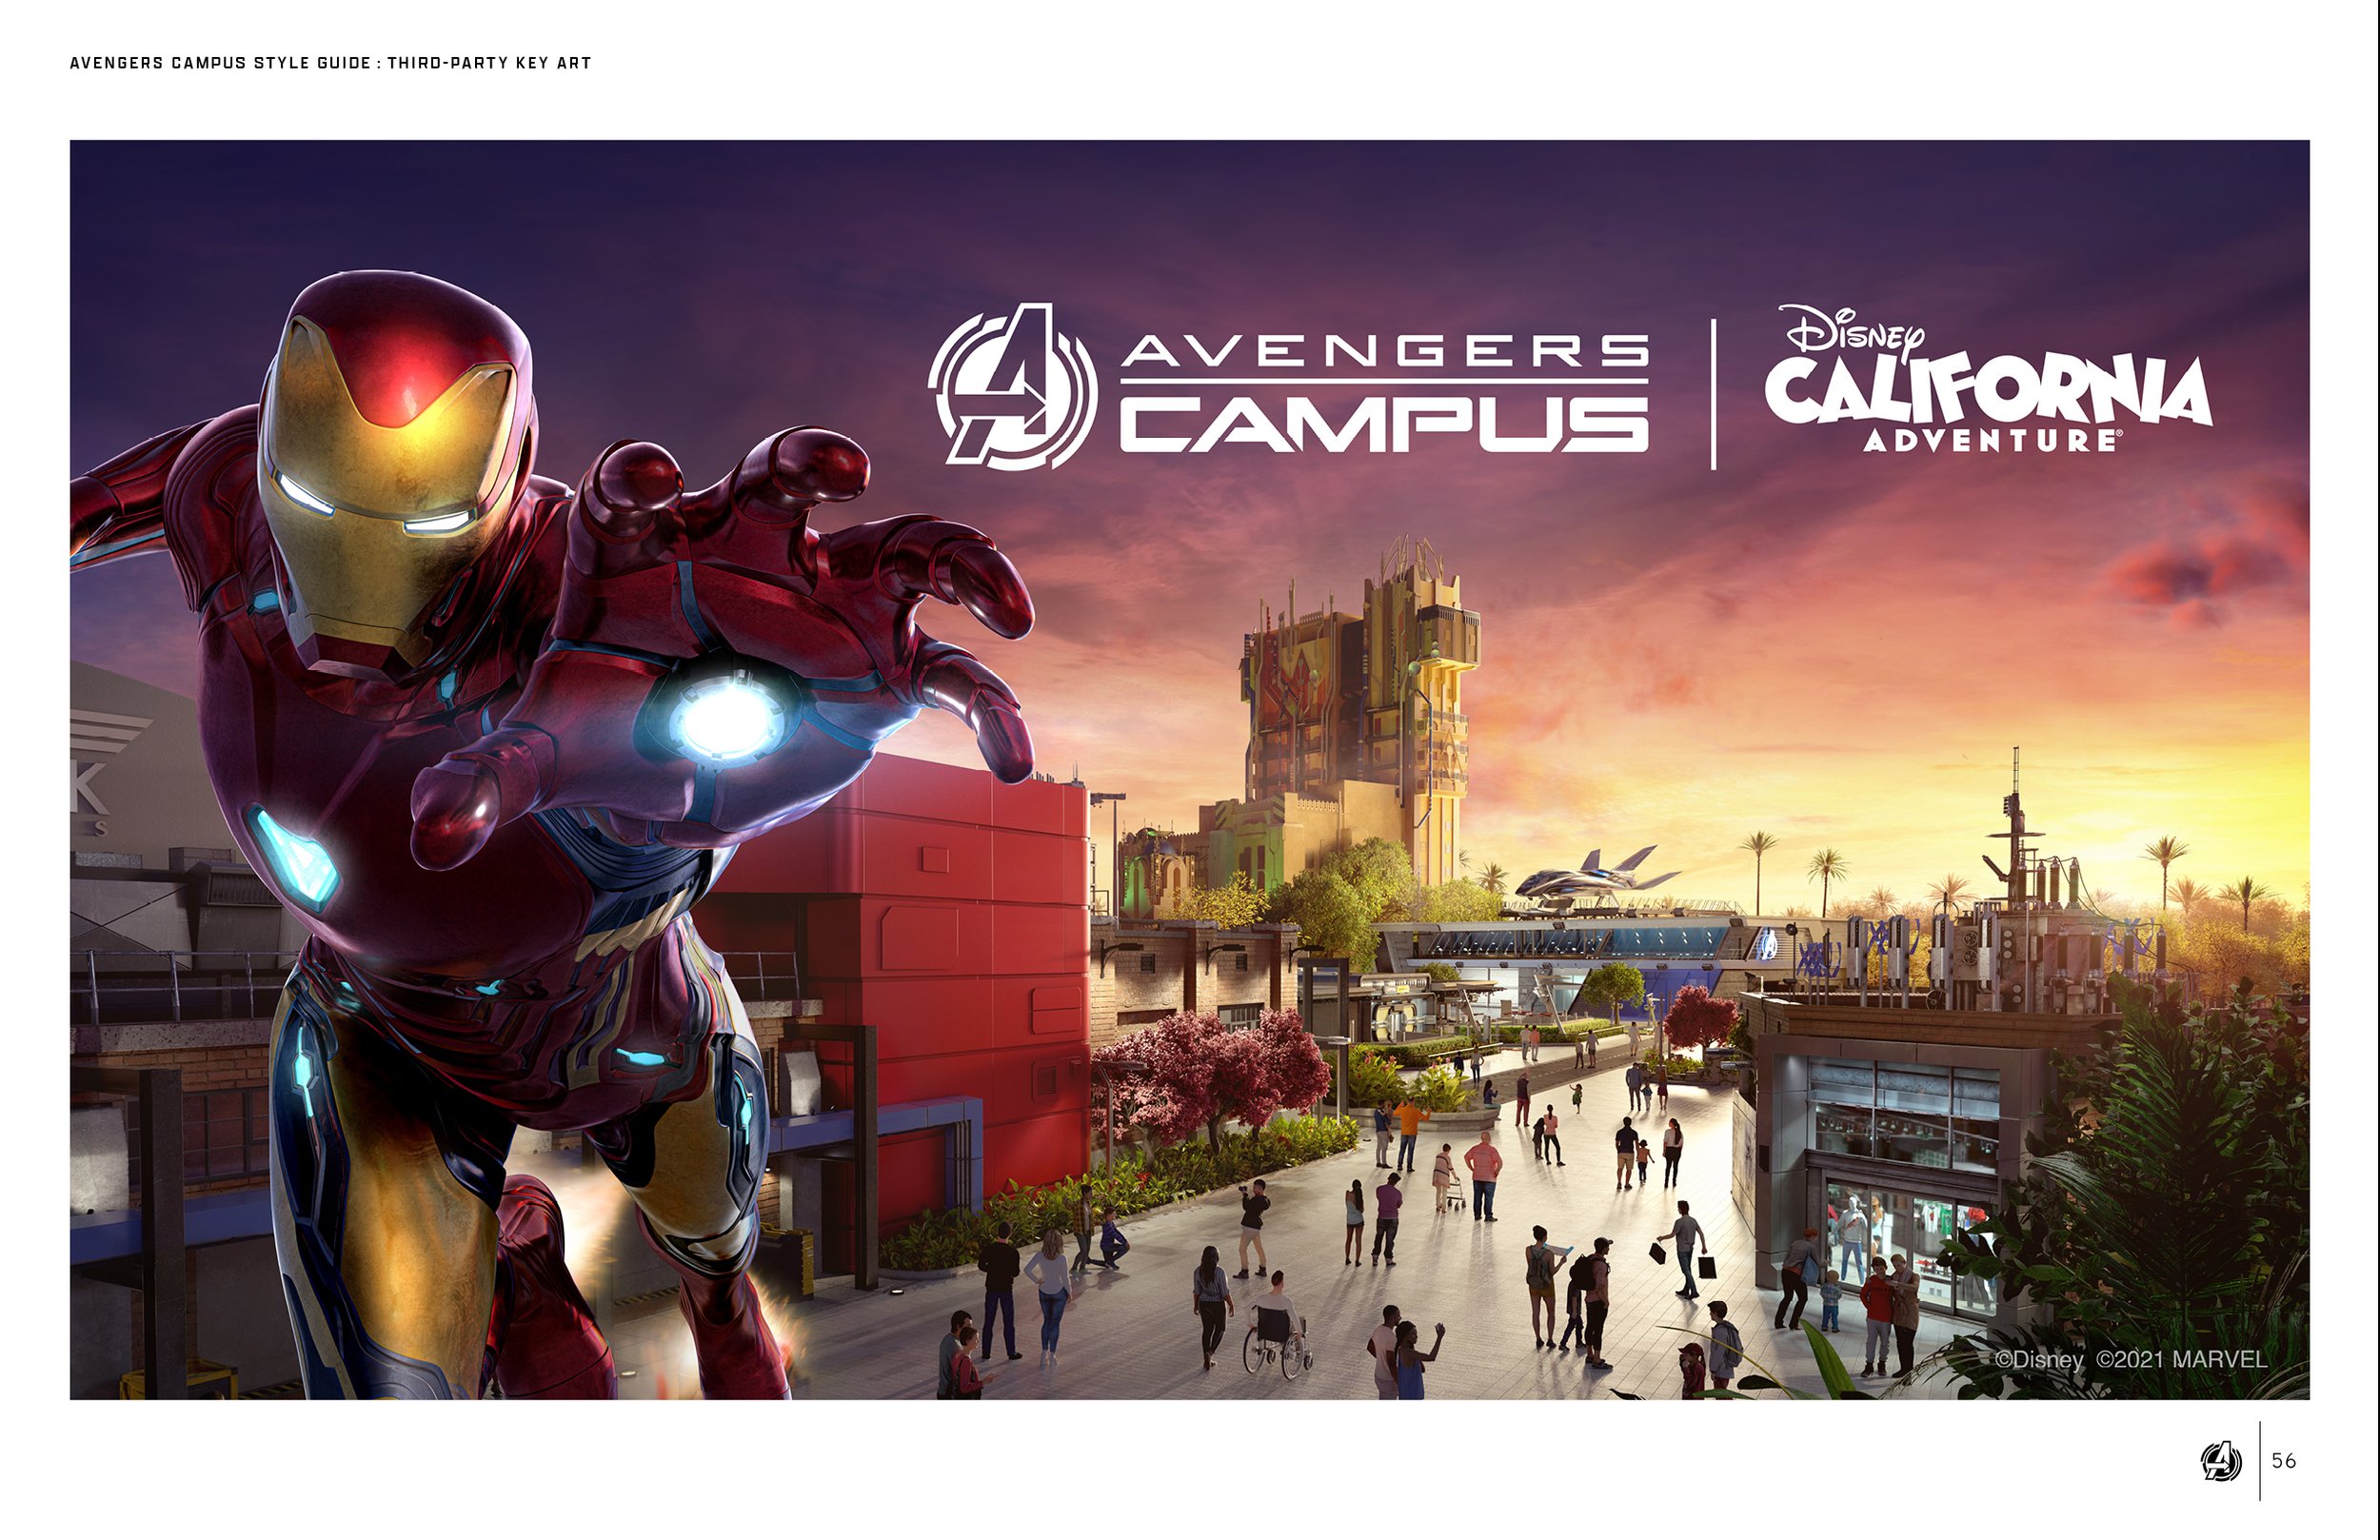 AvengersCampus_StyleGuide_Website_56.jpg